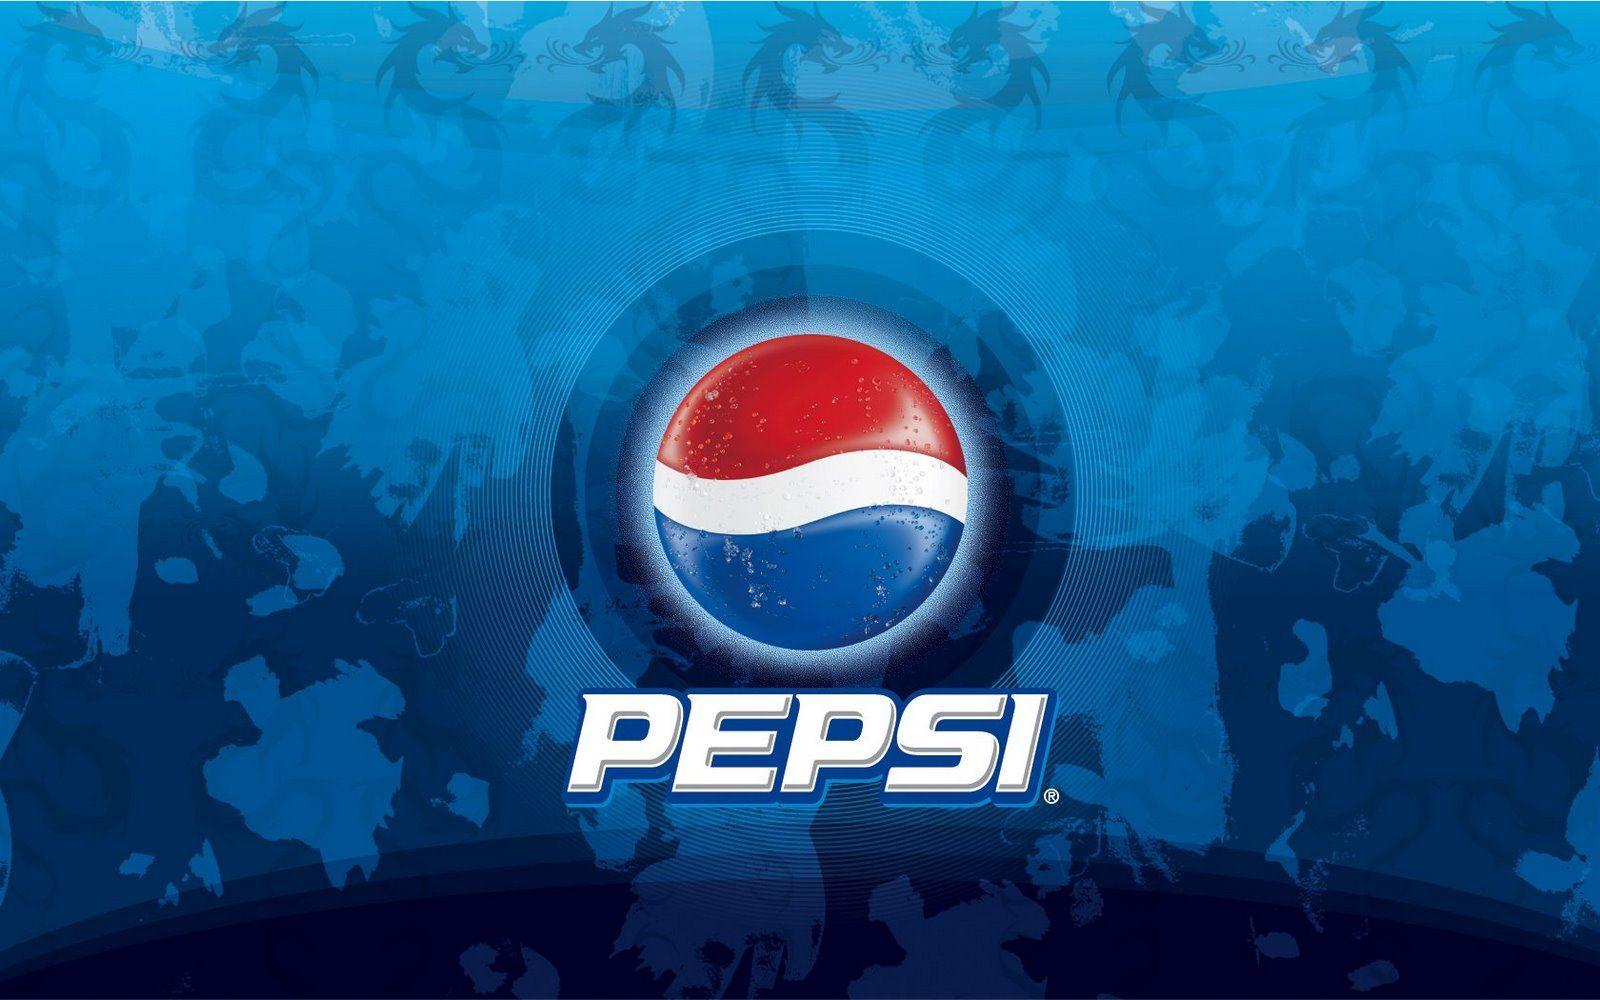 Pepsi Logo Wallpapers 33803 1600x1000 px